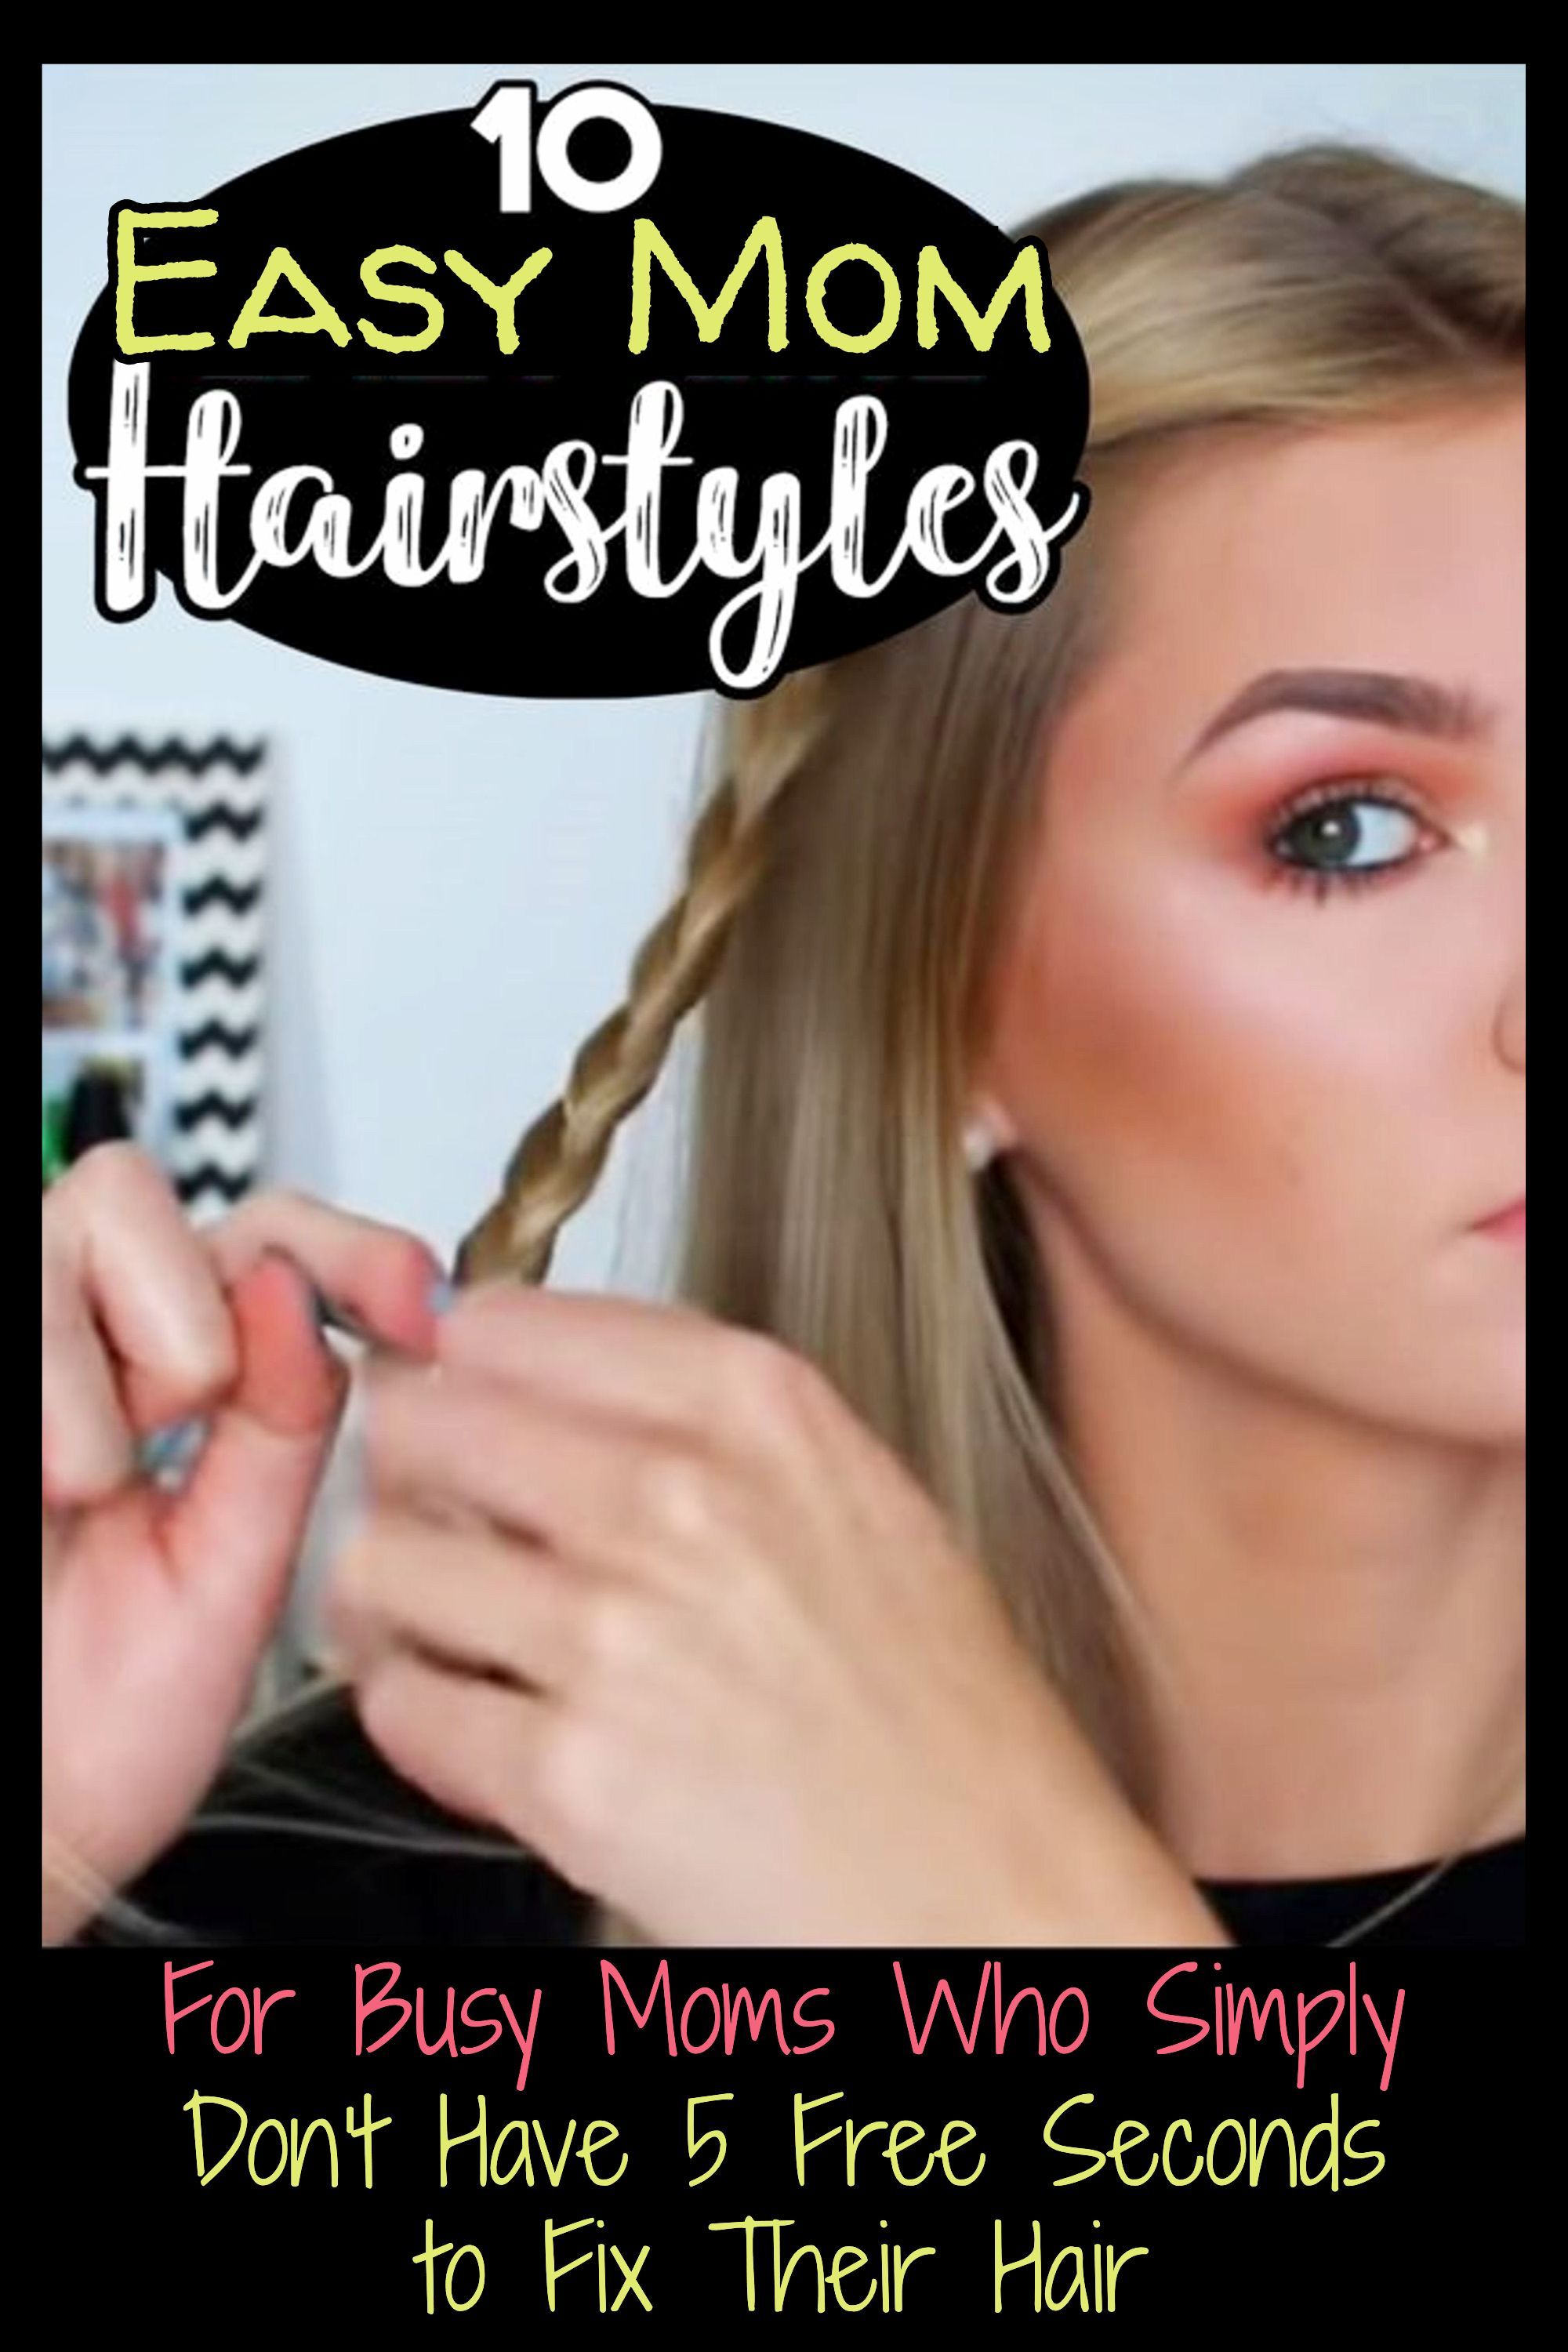 14 hairstyles Quick locks ideas